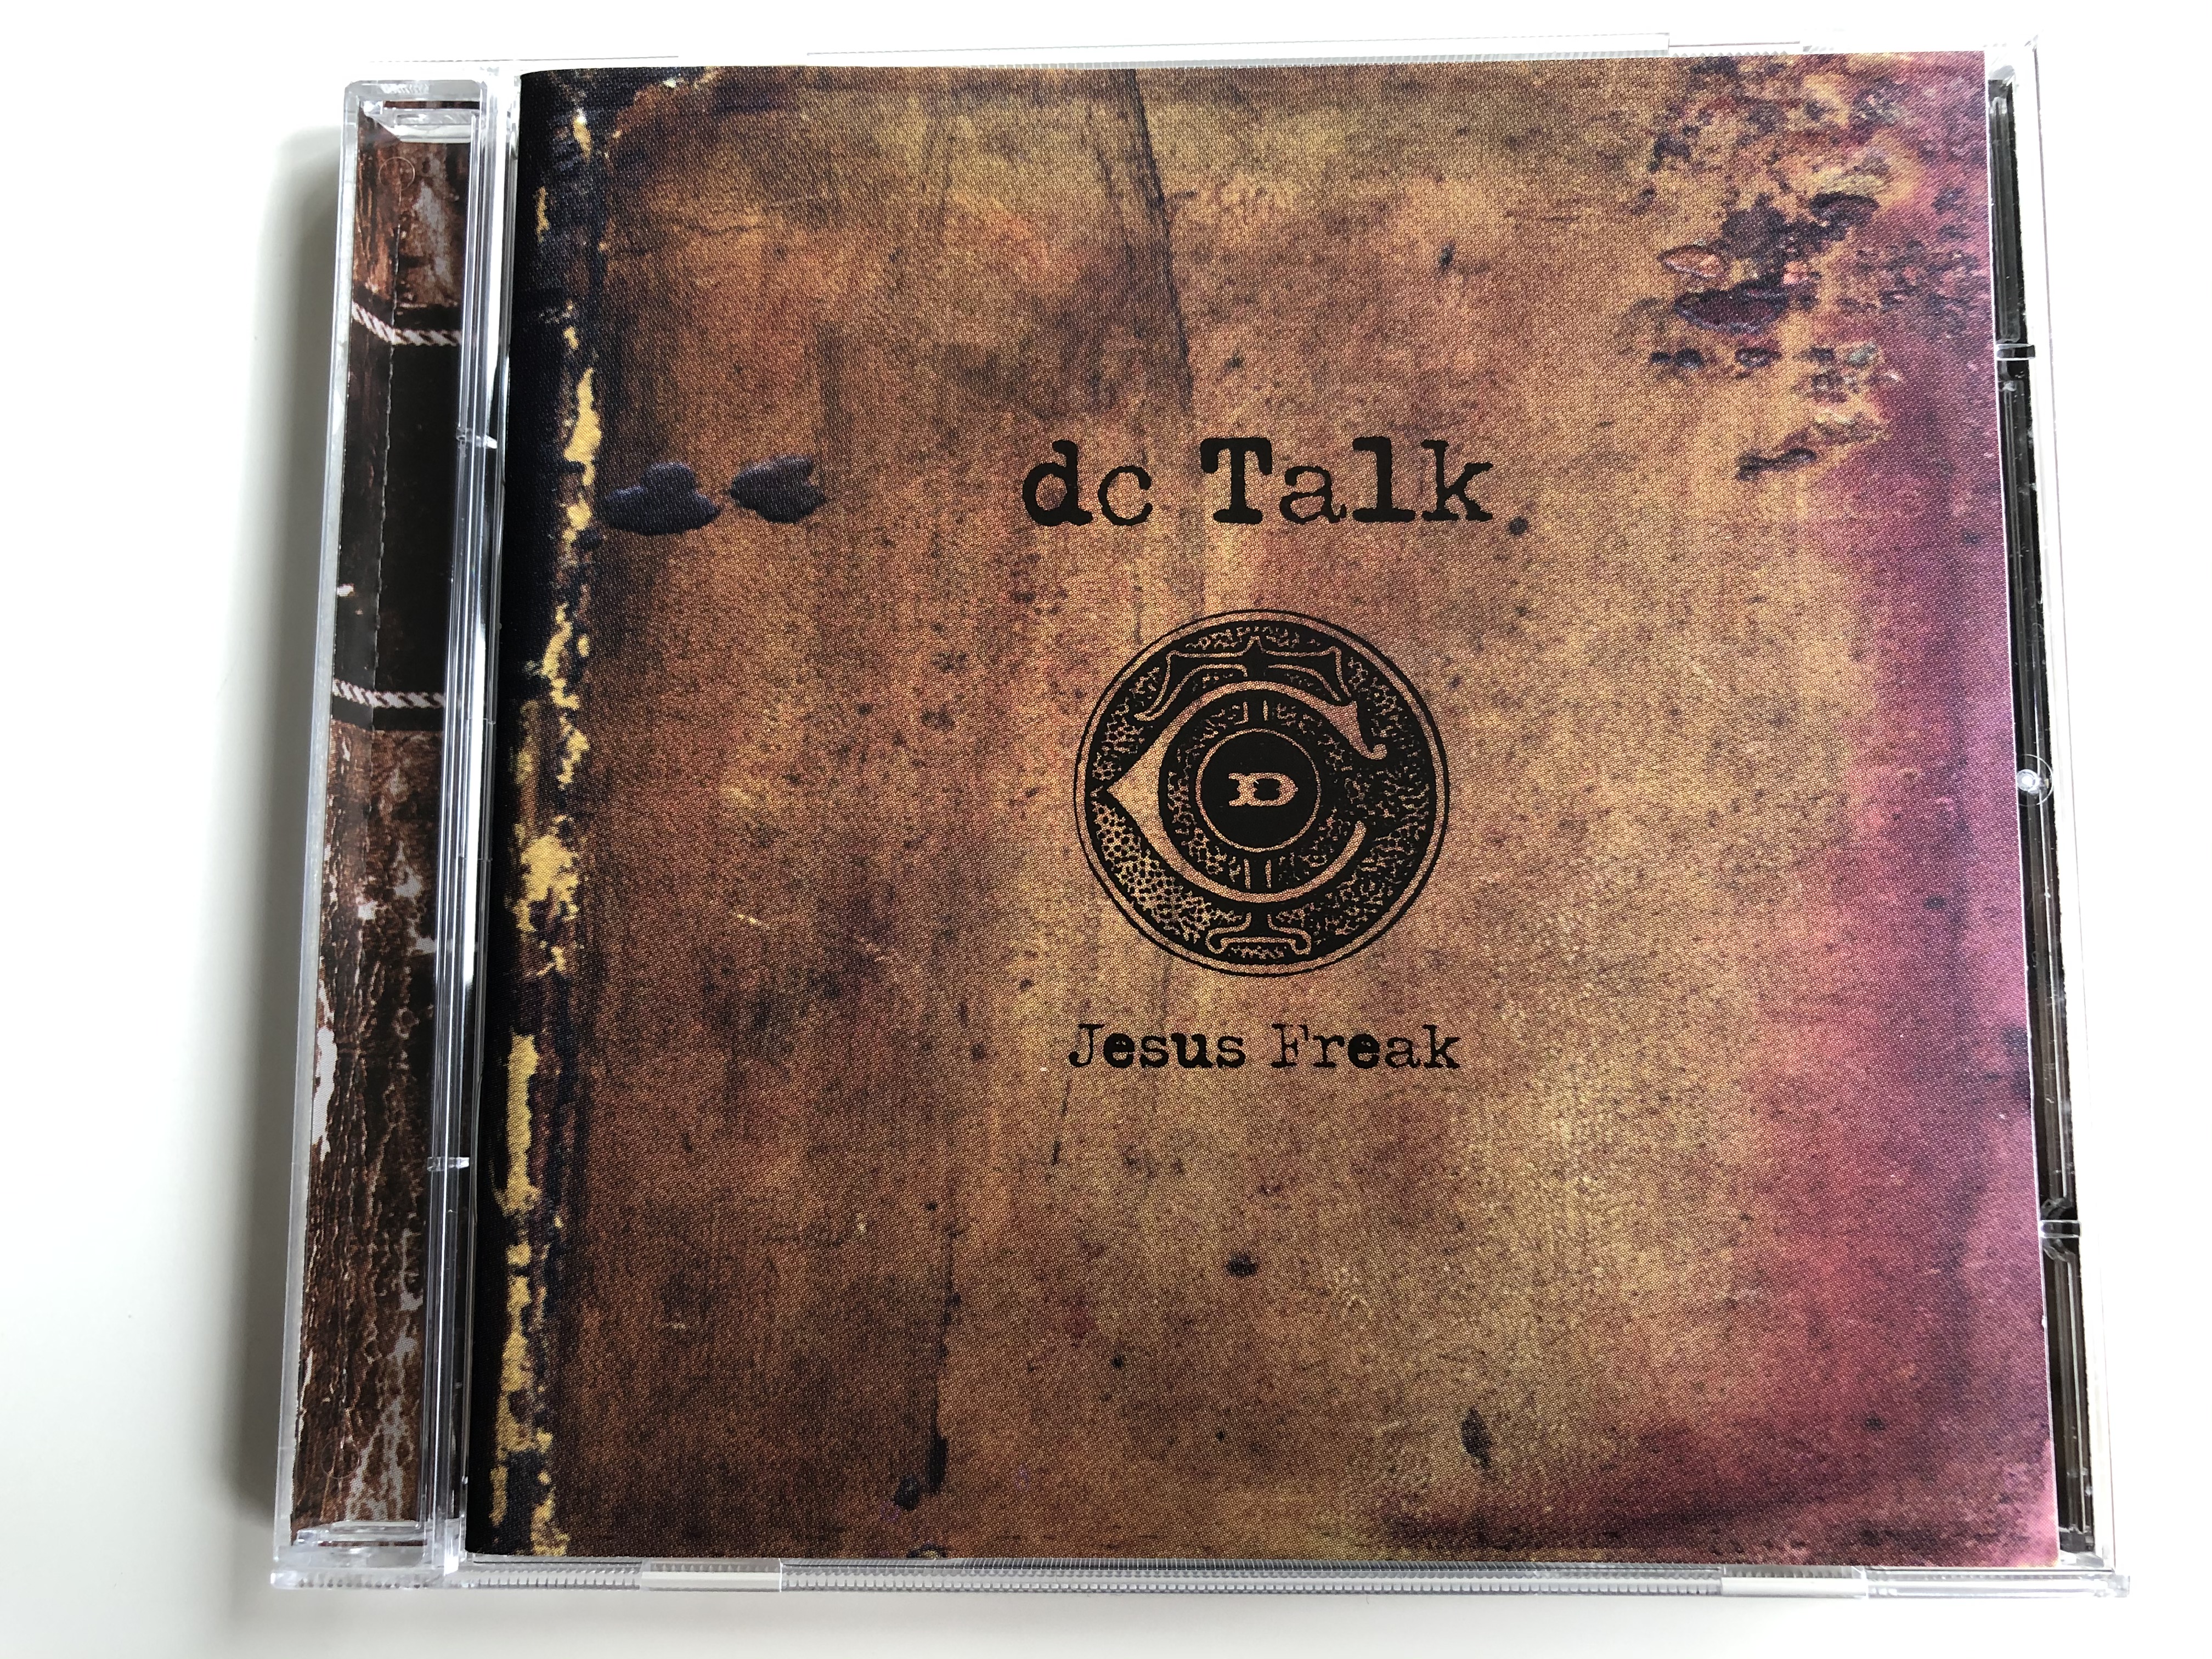 dc-talk-jesus-freak-forefront-records-audio-cd-1995-ffd5140-1-.jpg